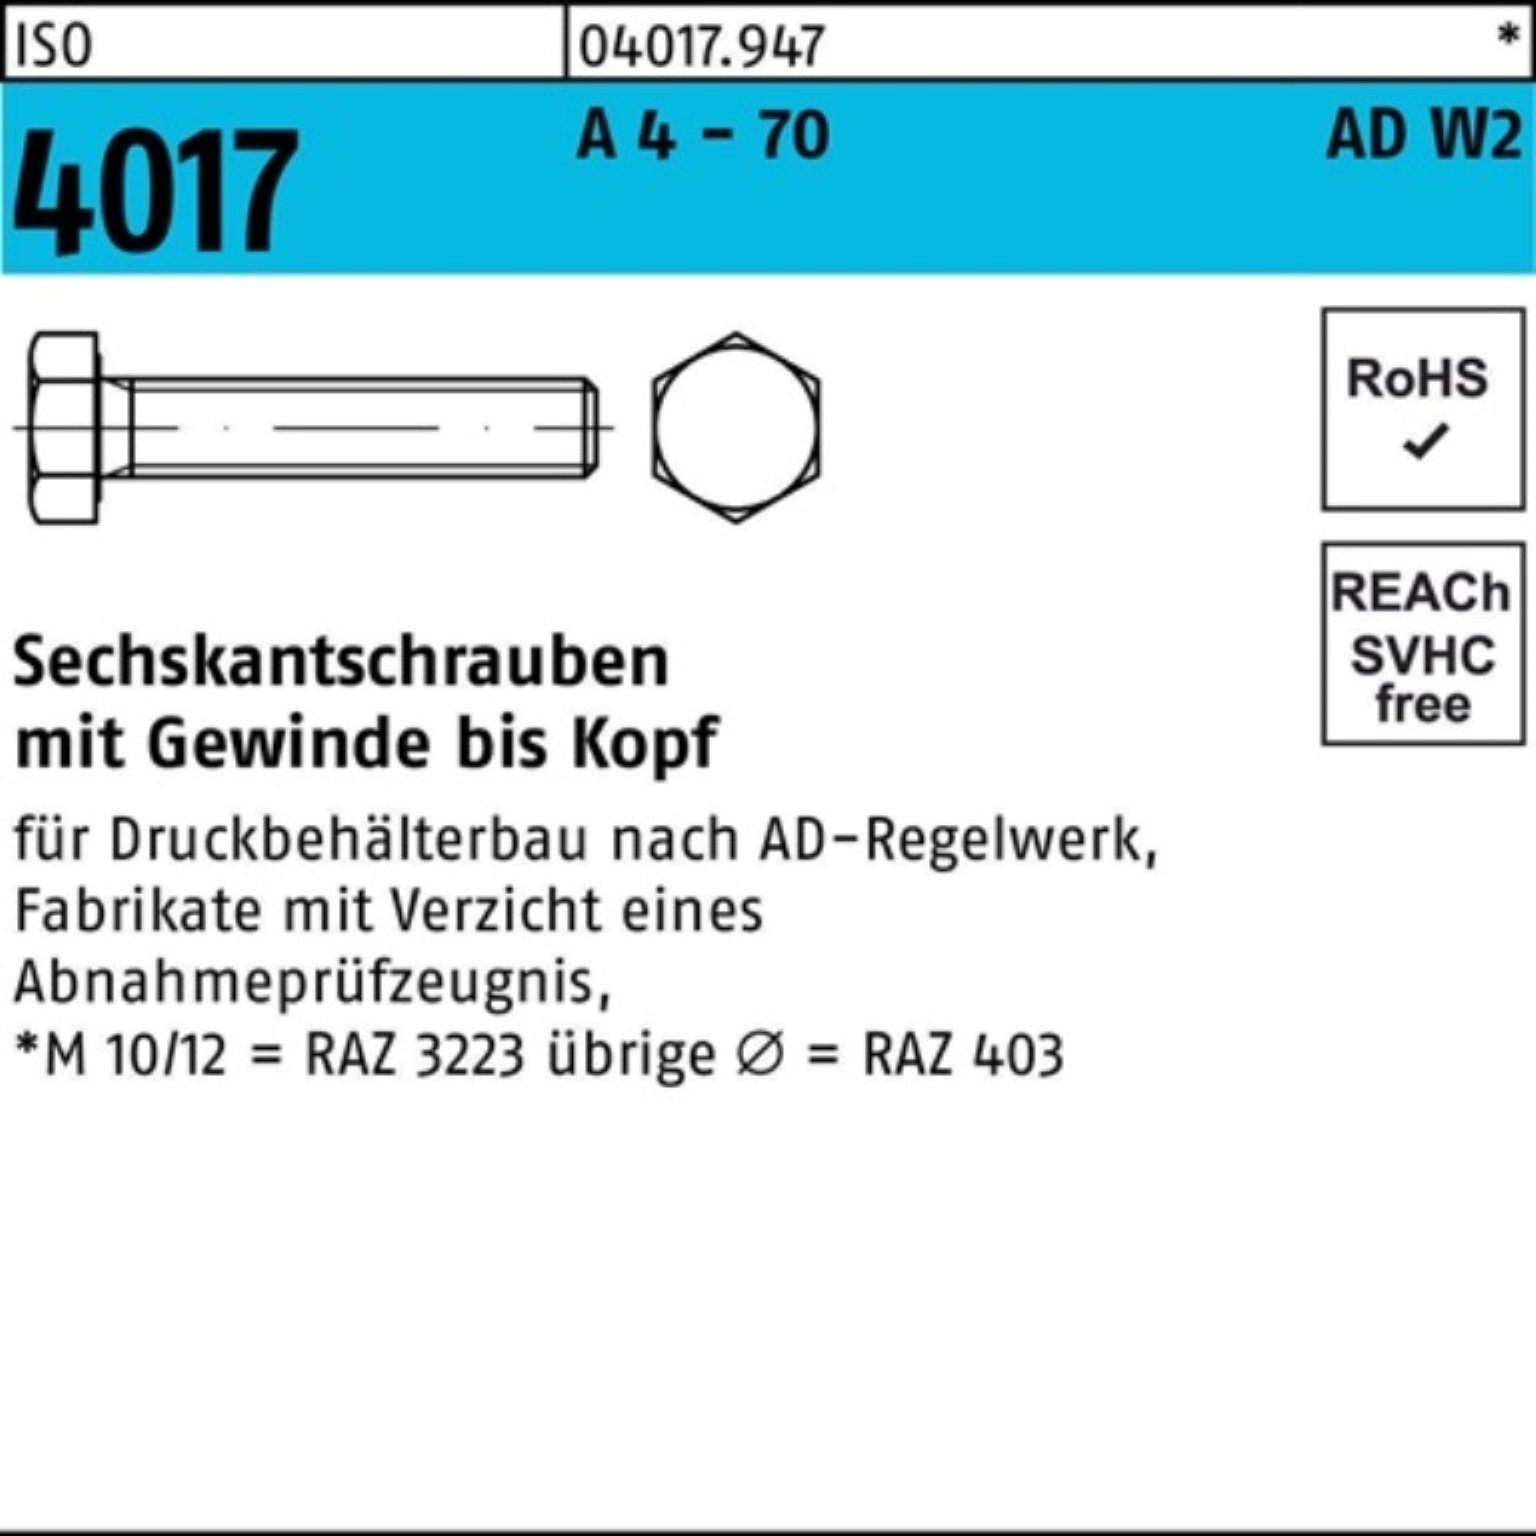 Bufab Sechskantschraube 100er Pack Sechskantschraube ISO 4017 VG M8x 45 A 4 - 70 AD-W2 100 St